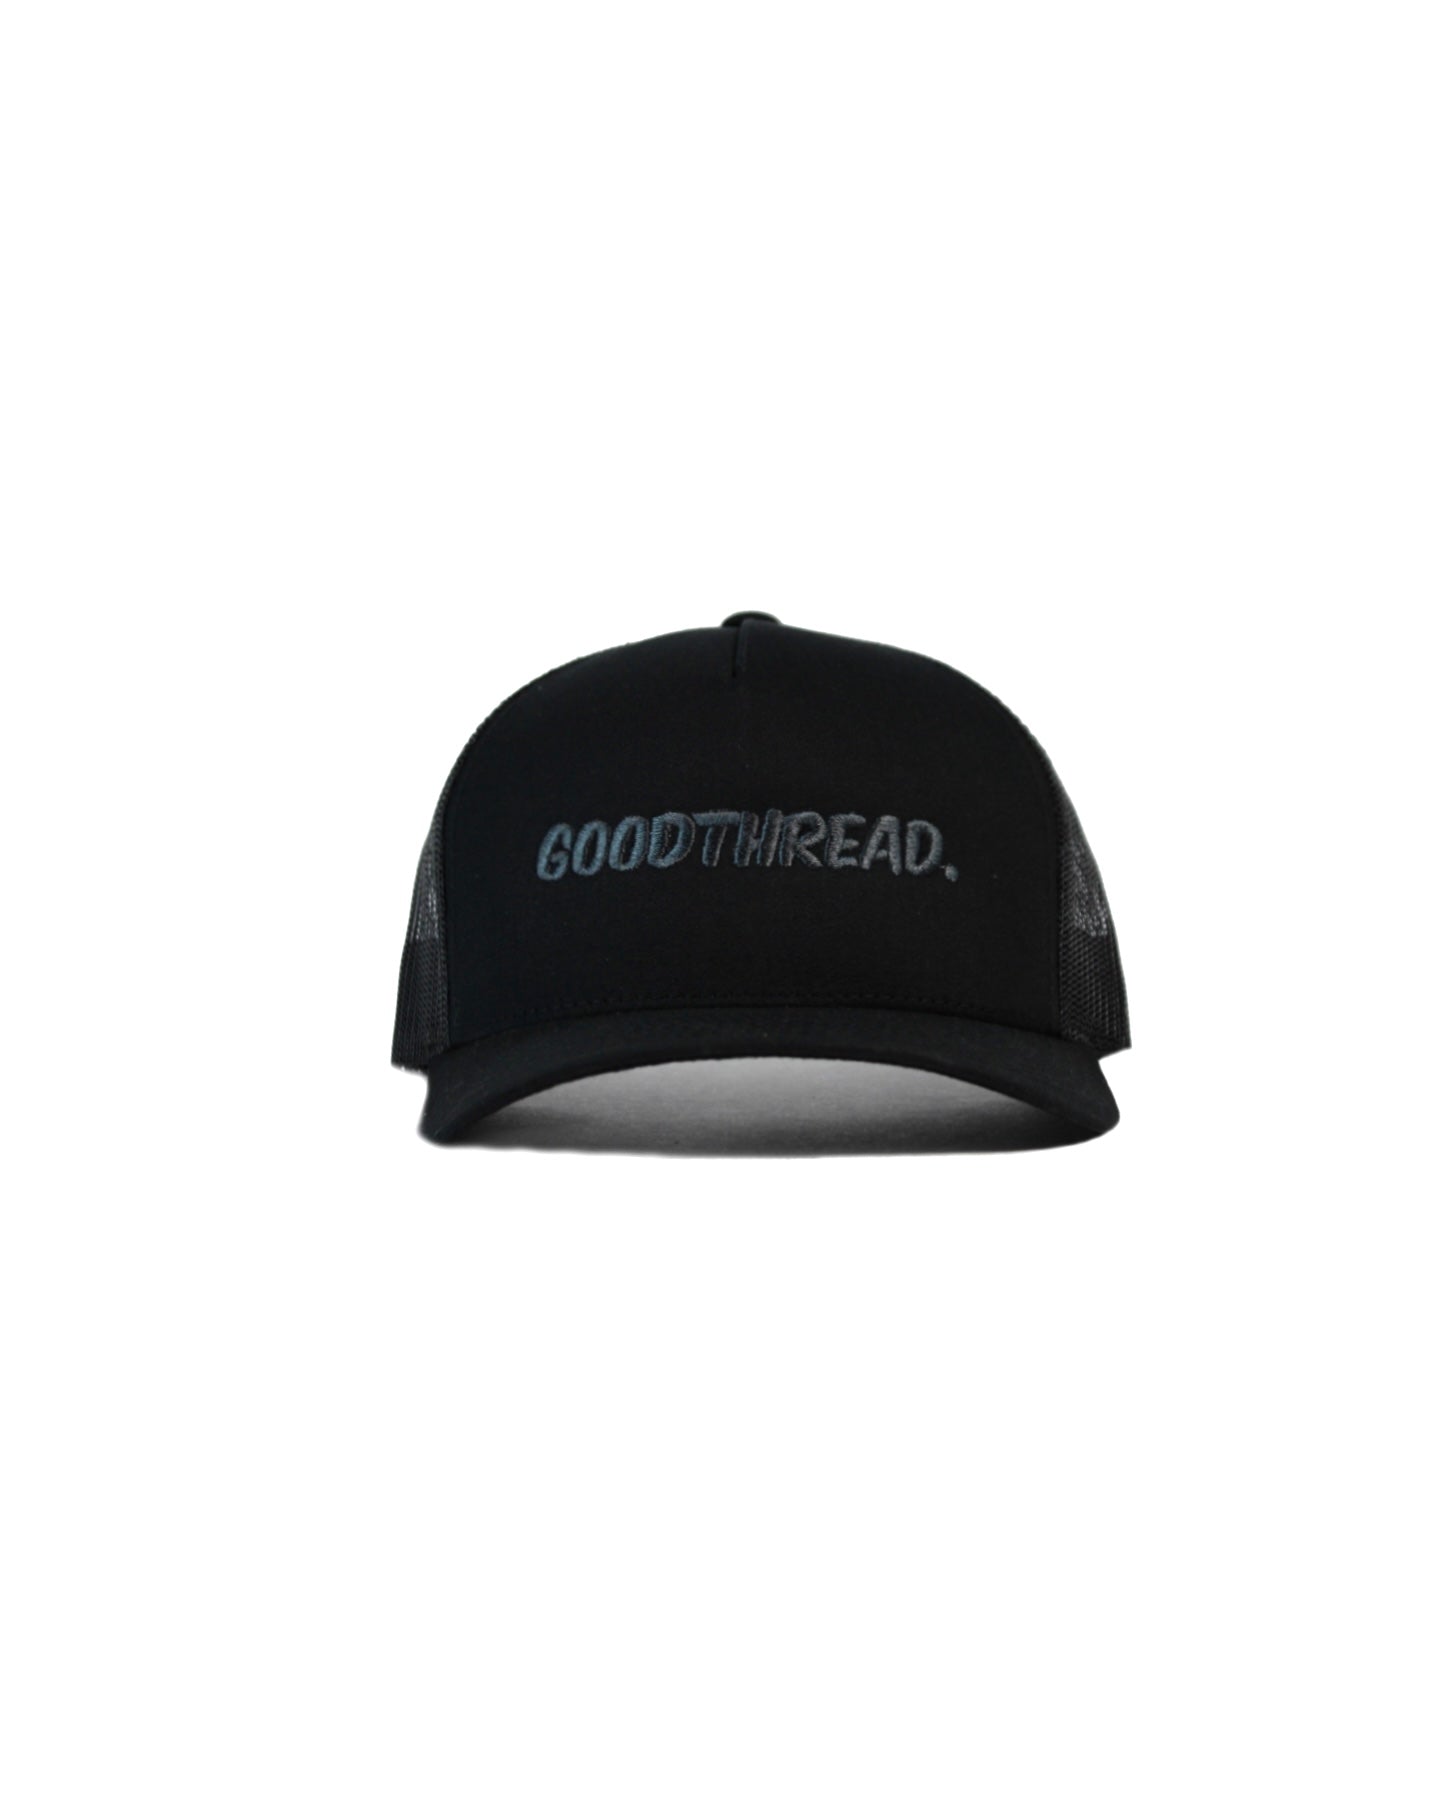 Goodthread Mesh Curved Hat